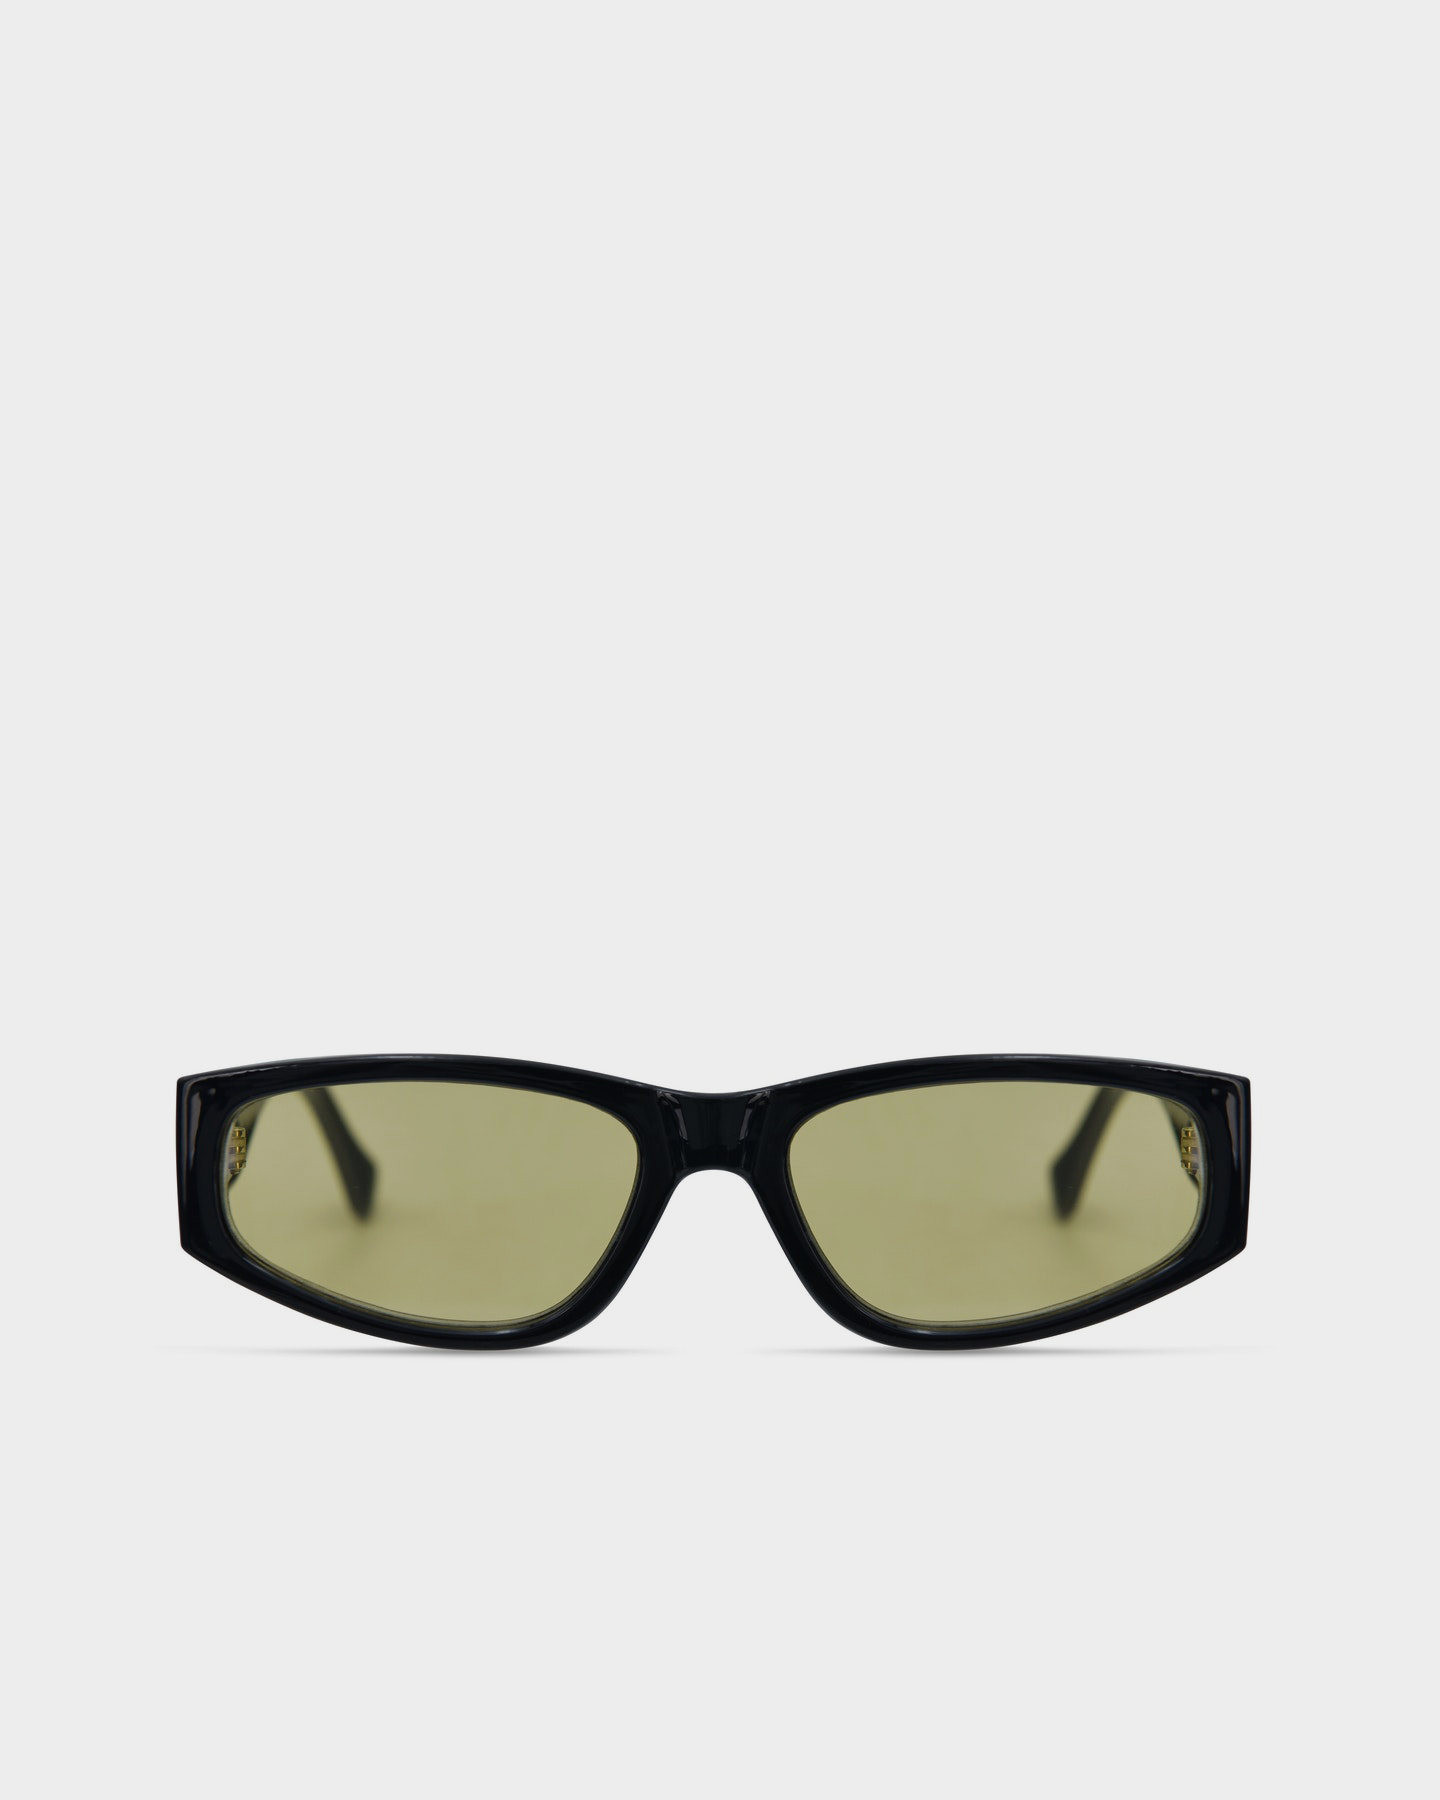 Reality Eyewear The Rush Sunglasses - Olive | SurfStitch